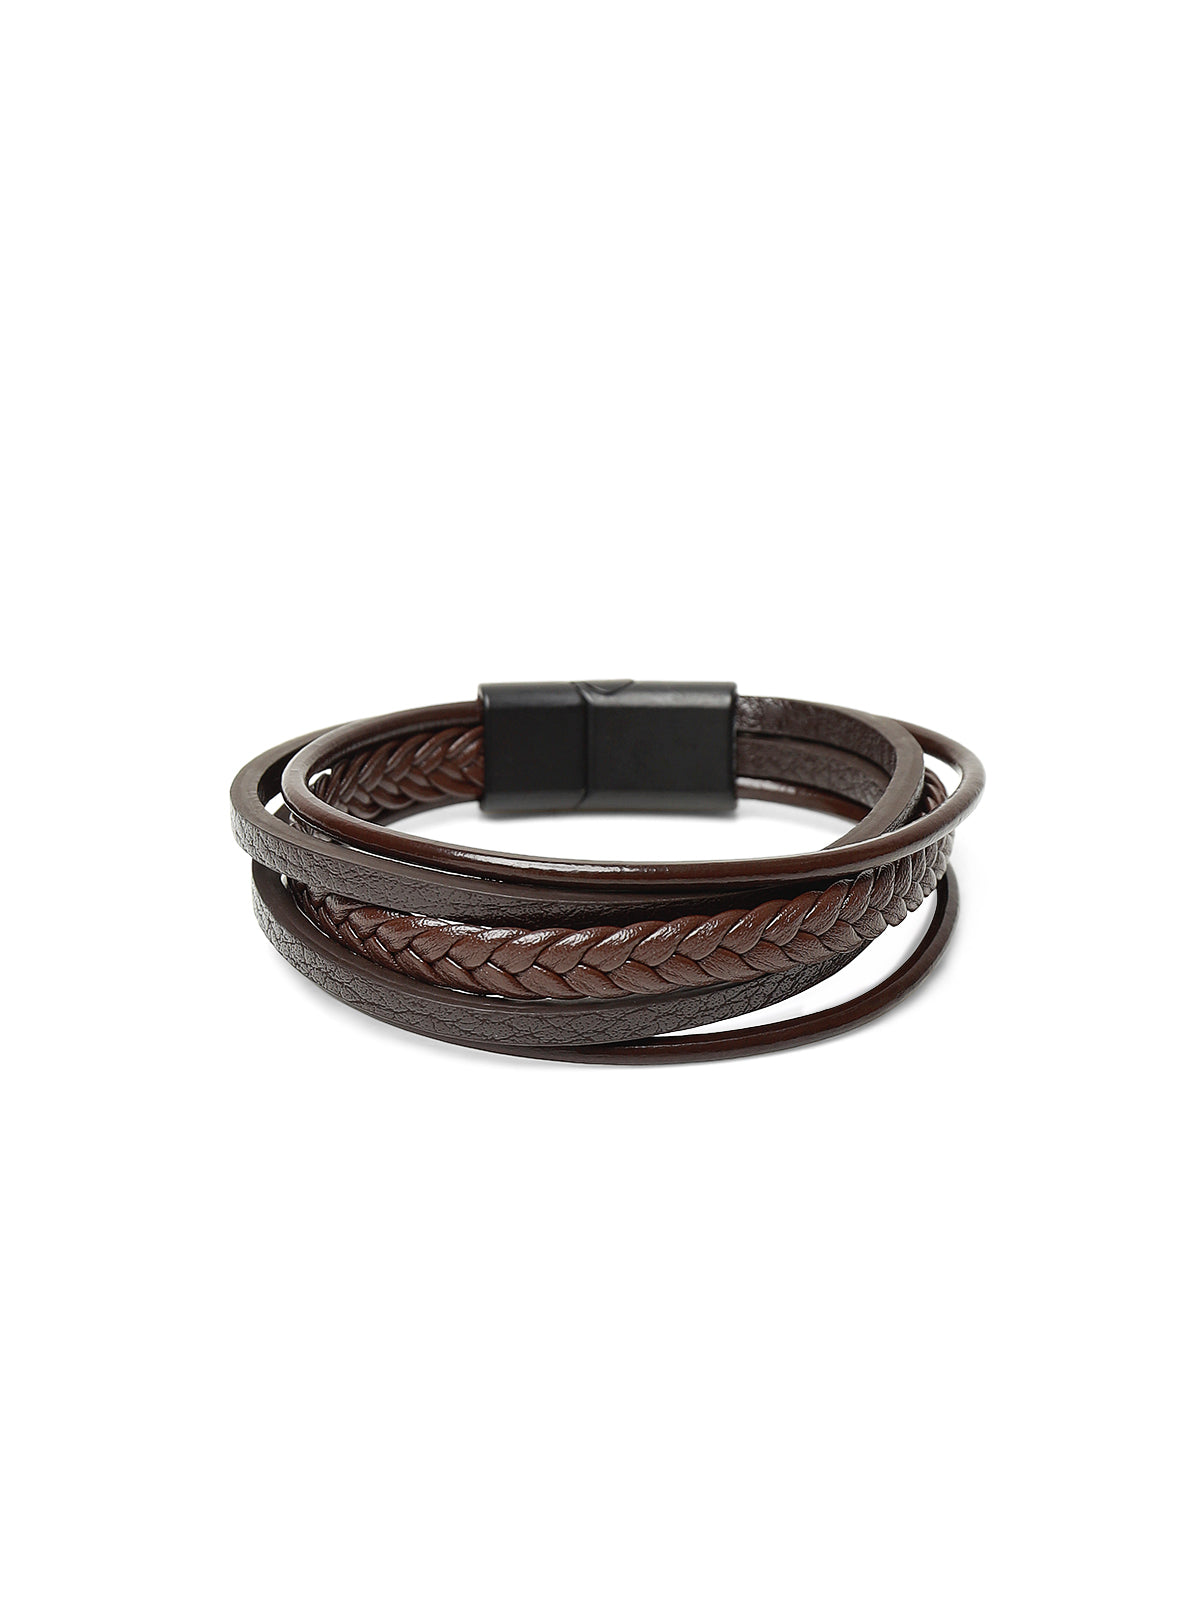 Brown Leather Bracelet - FABR24-014